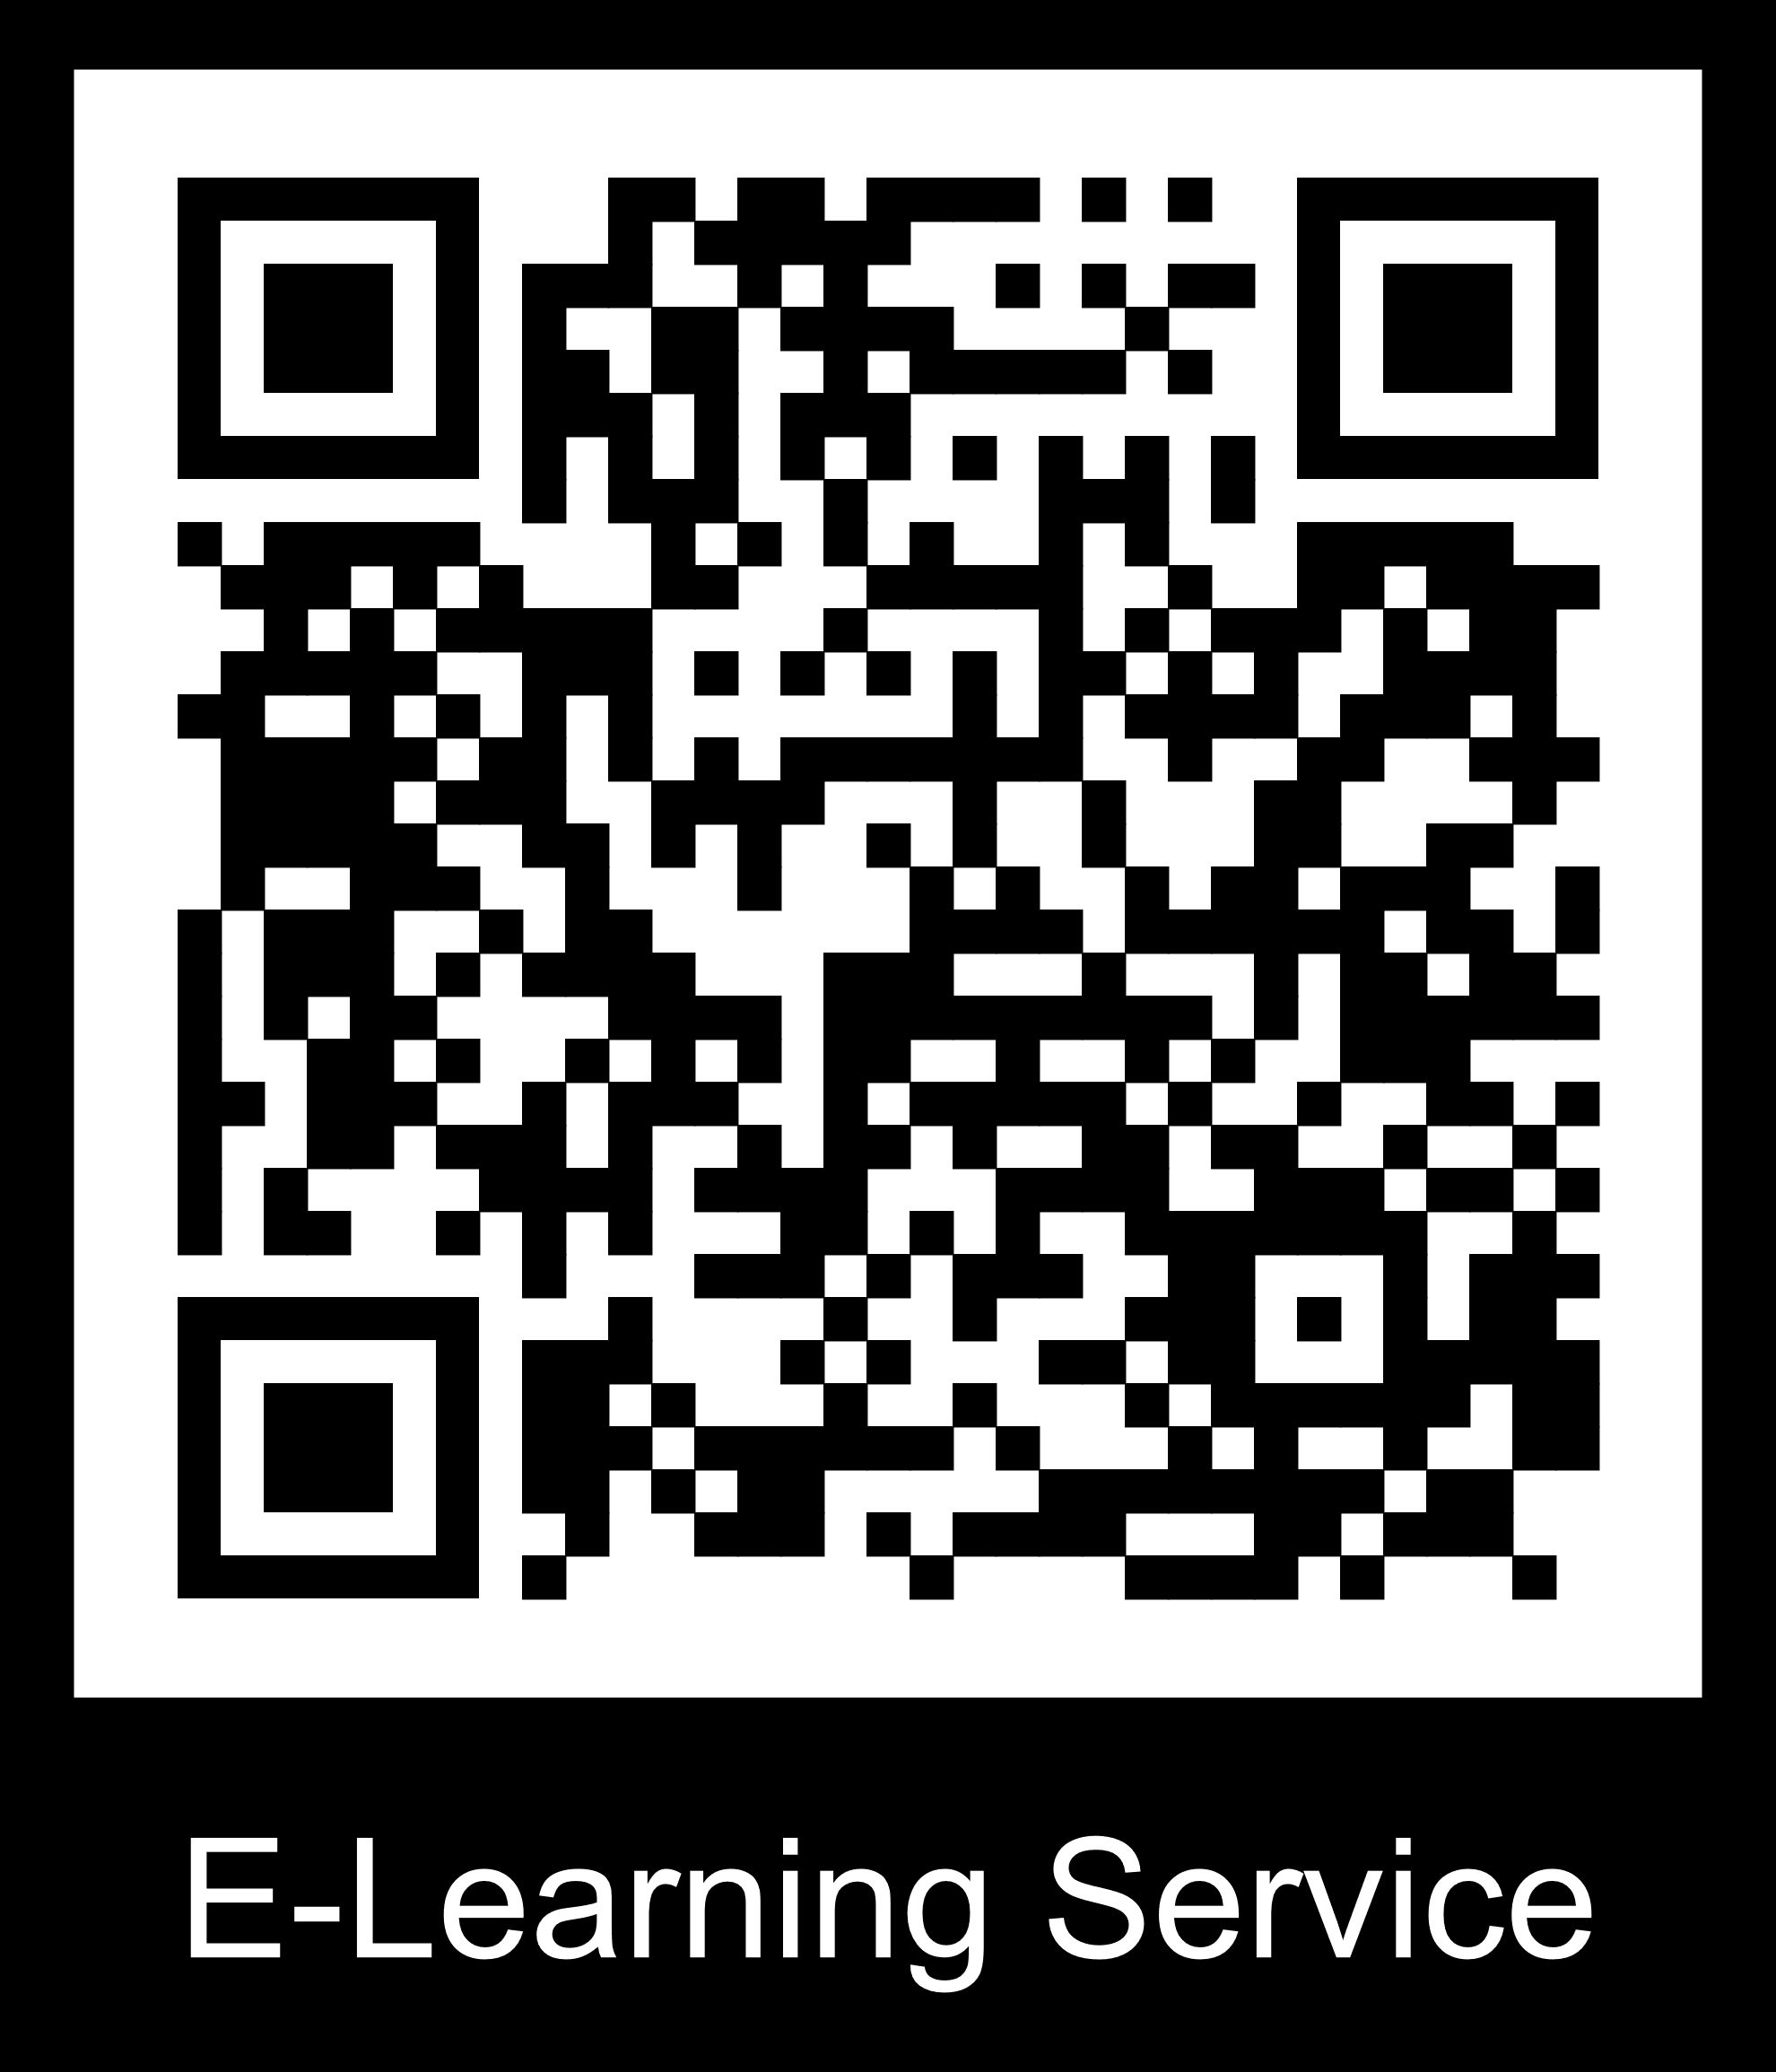 qr-elearning-service